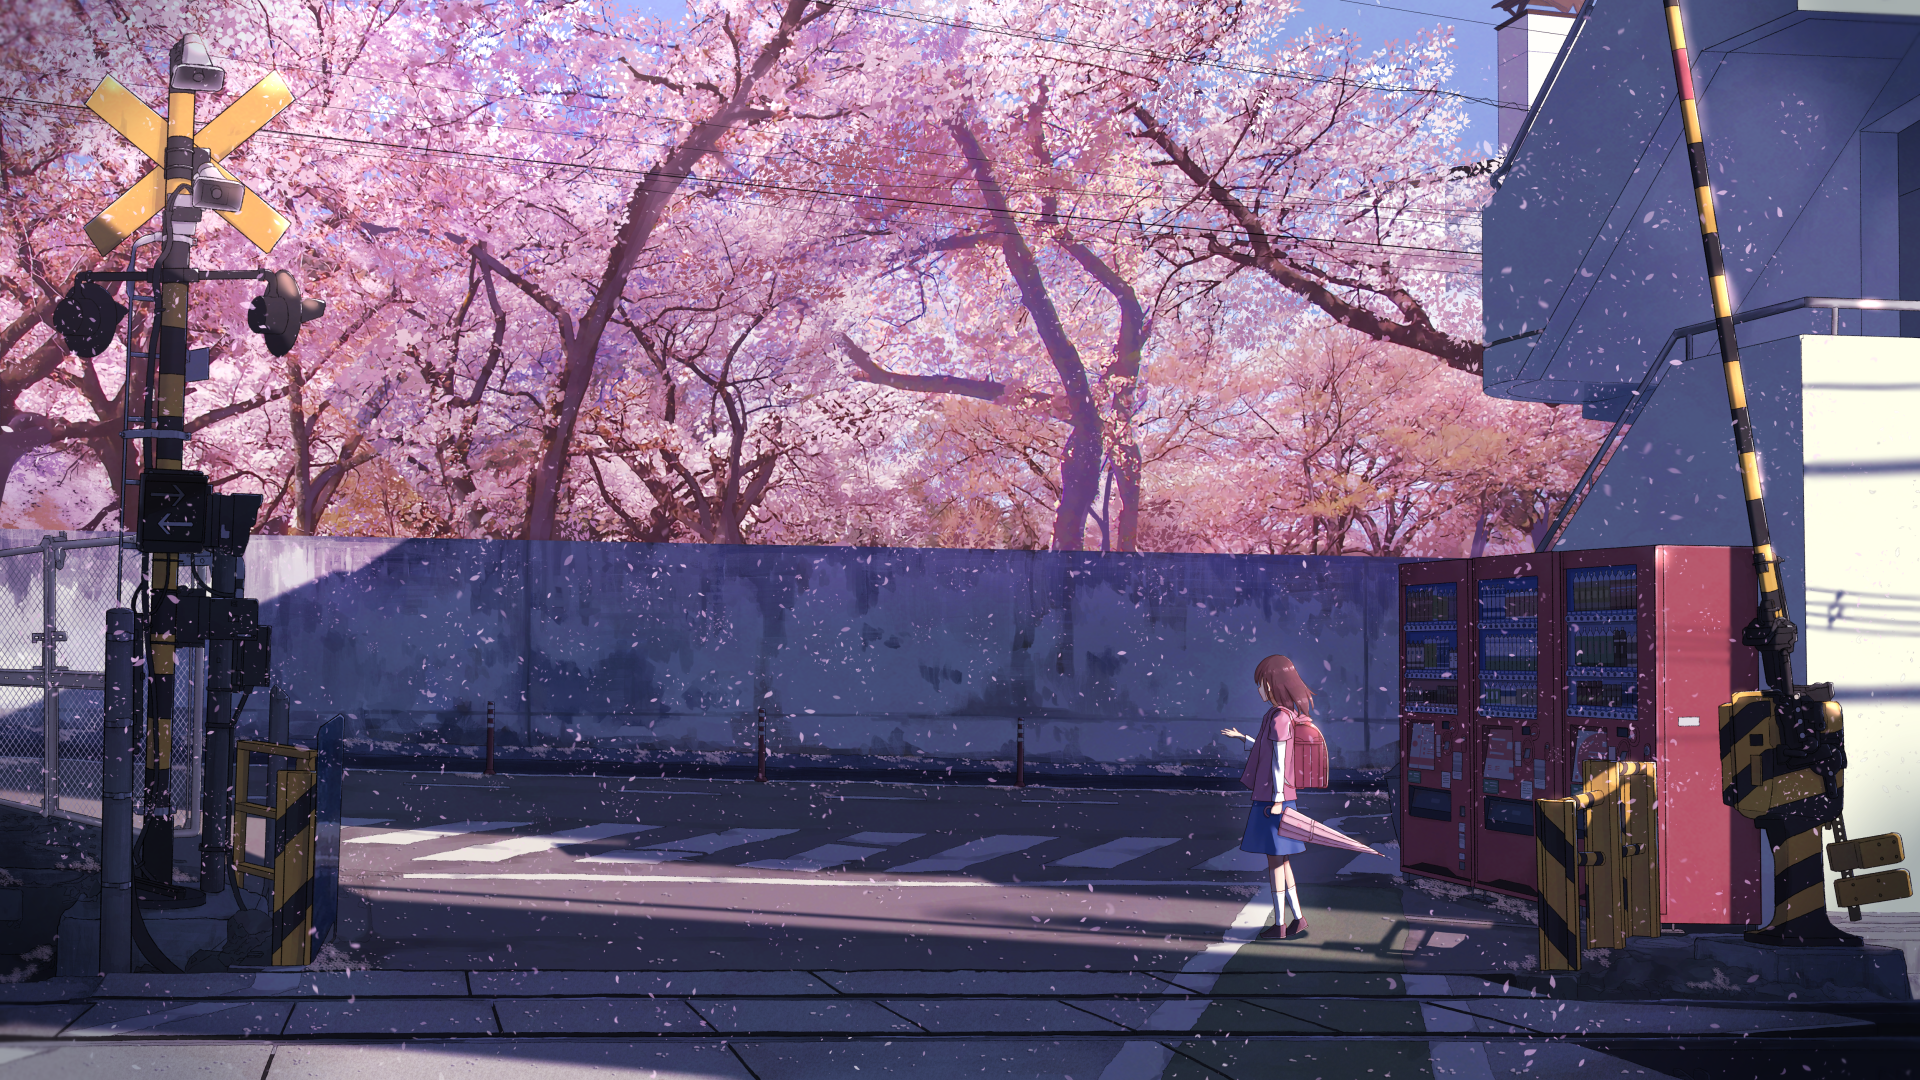 Download 1920x1080 Anime School Girl, Sakura Blossom, Spring, Trees, Scenery Wallpaper for Widescreen